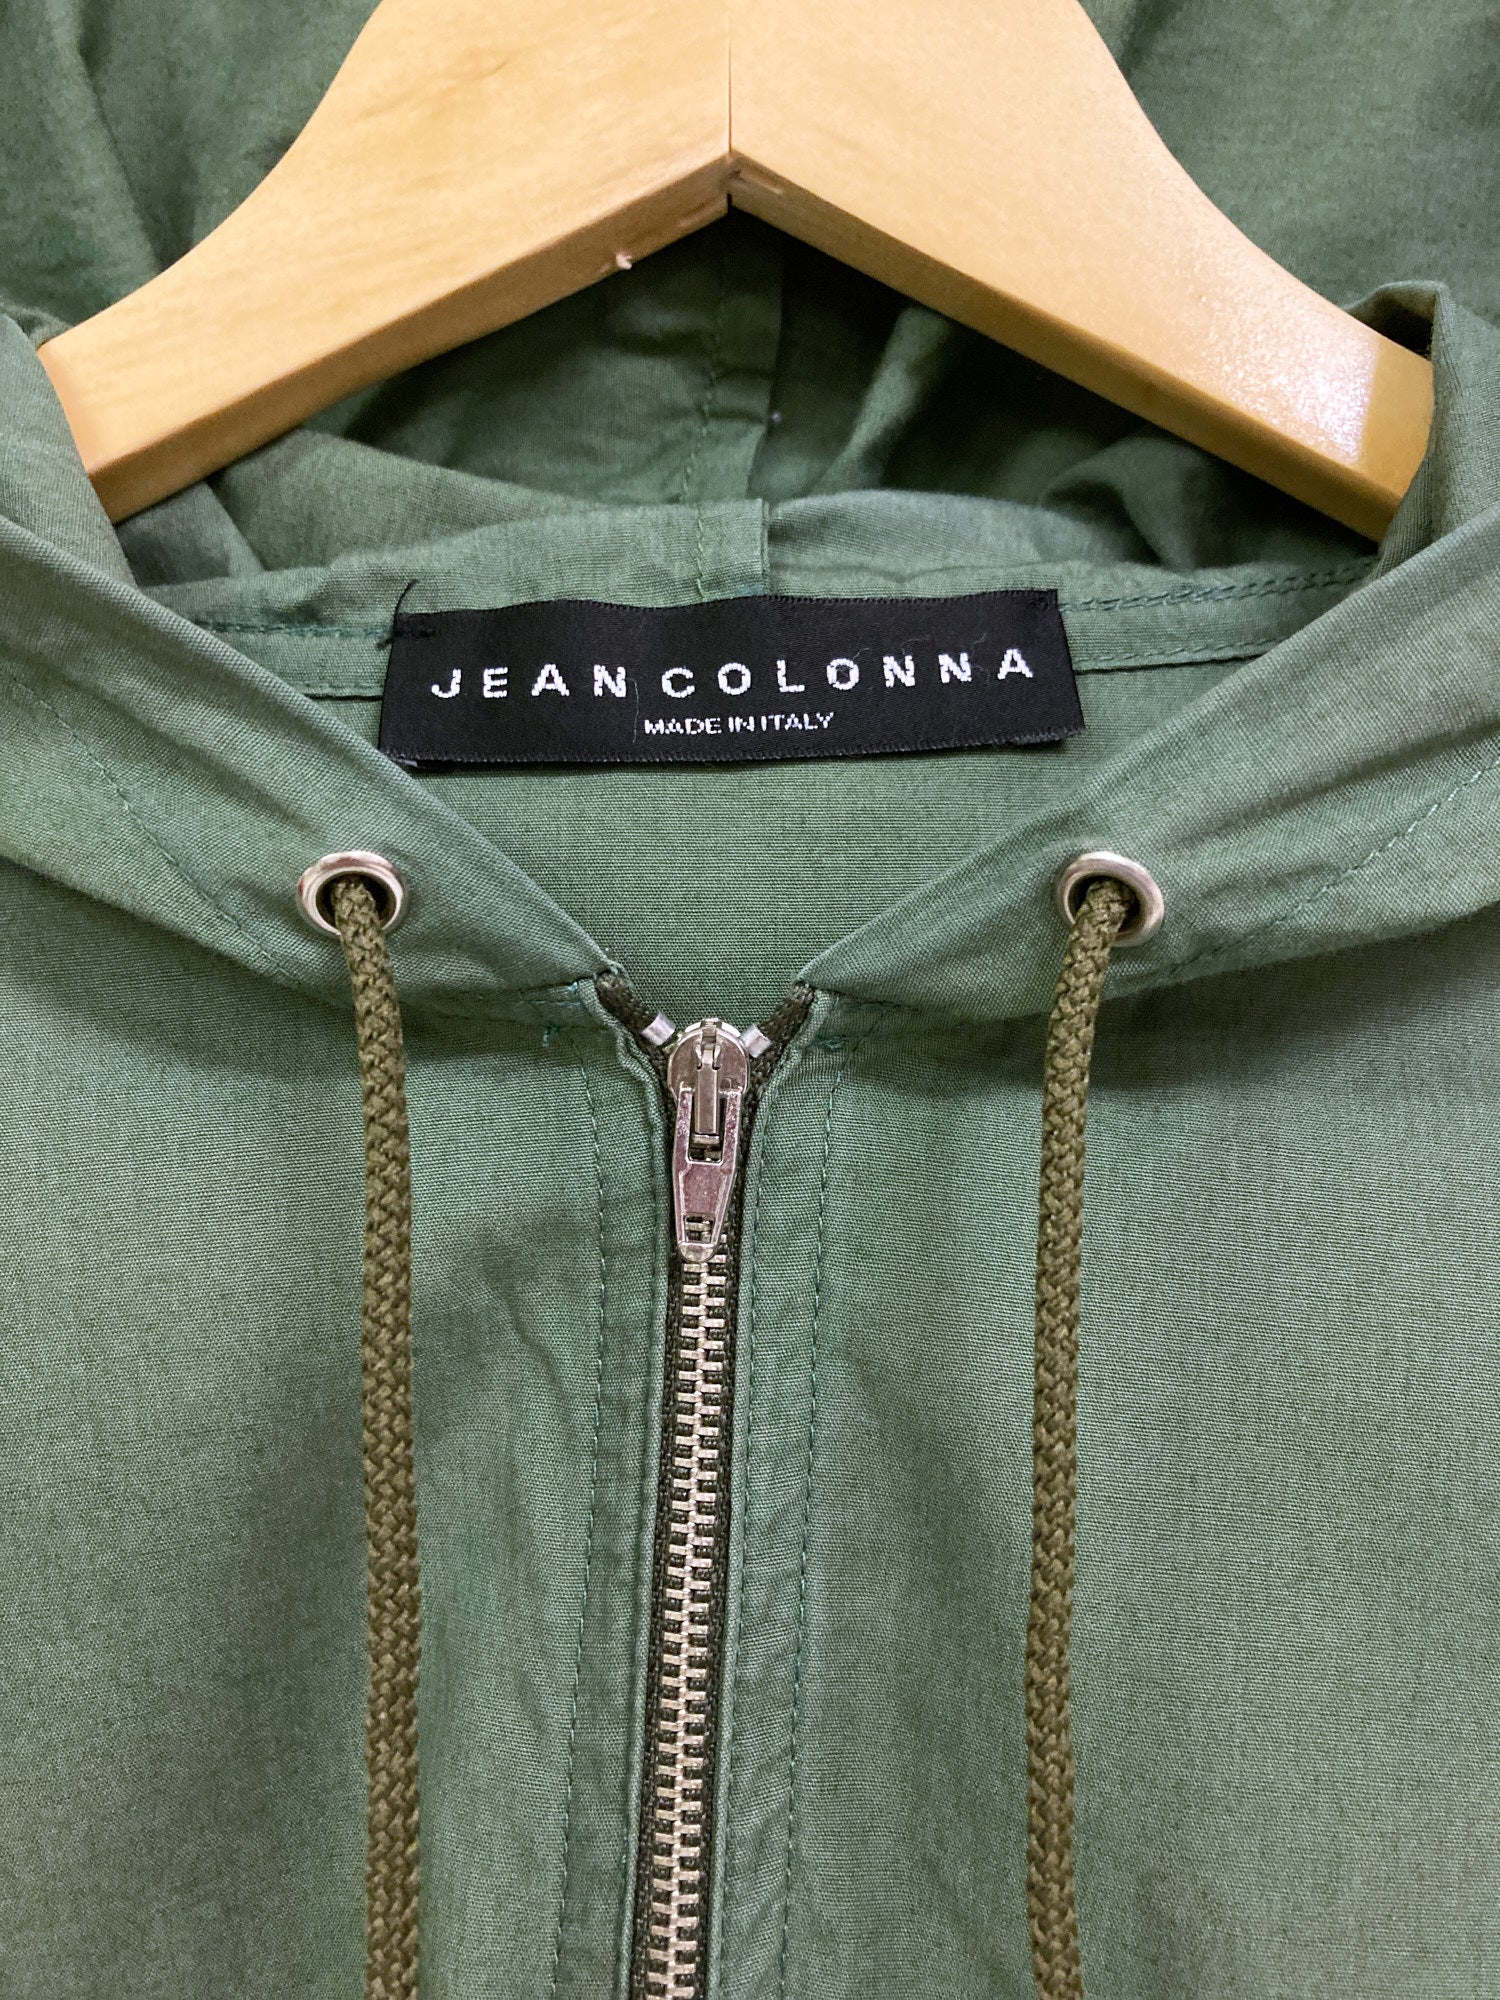 Jean Colonna khaki cotton hooded pullover windbreaker - size 46